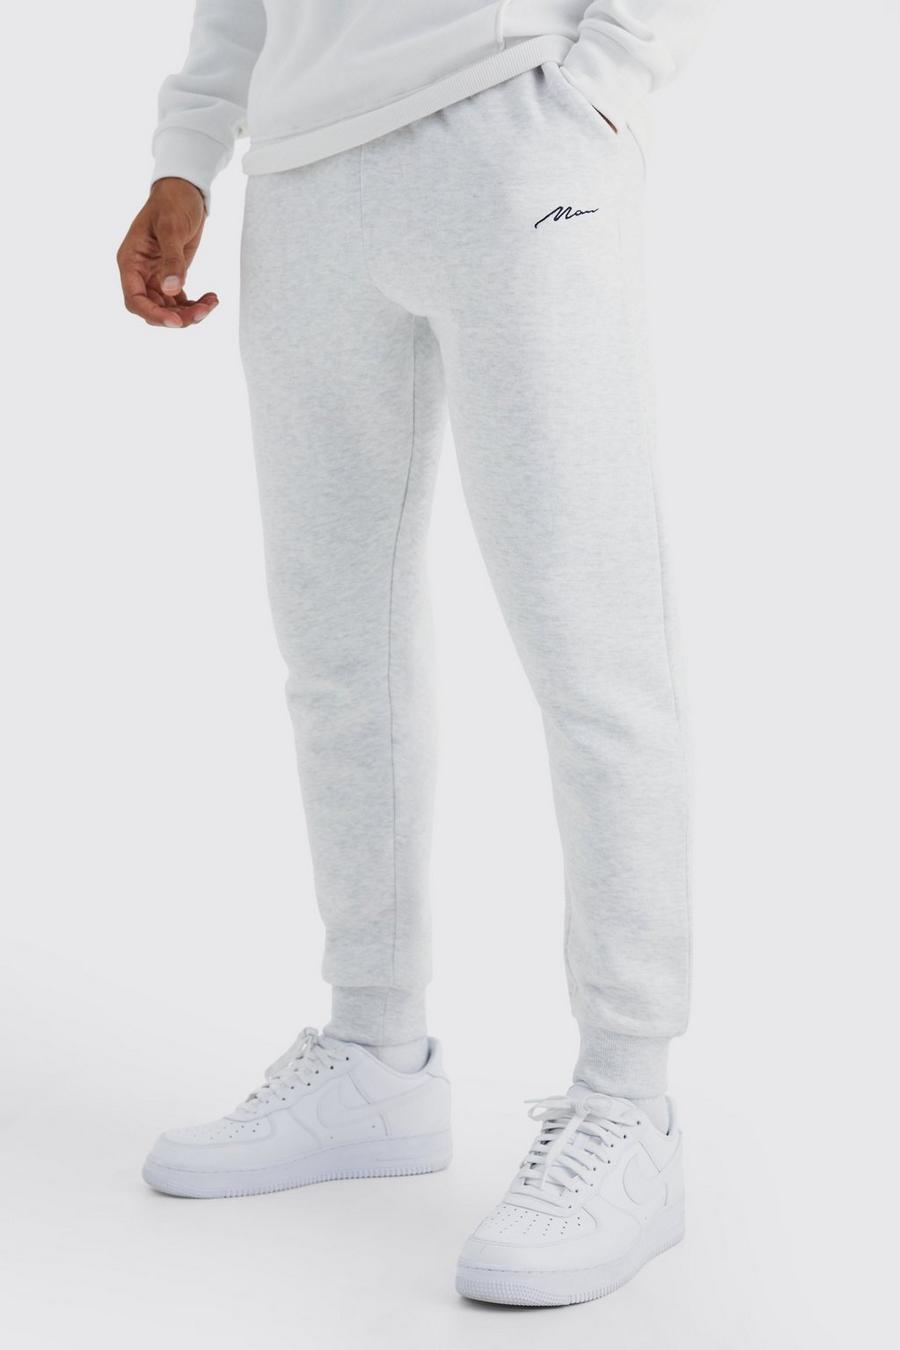 Pantalón deportivo ajustado con firma MAN, Grey marl gris